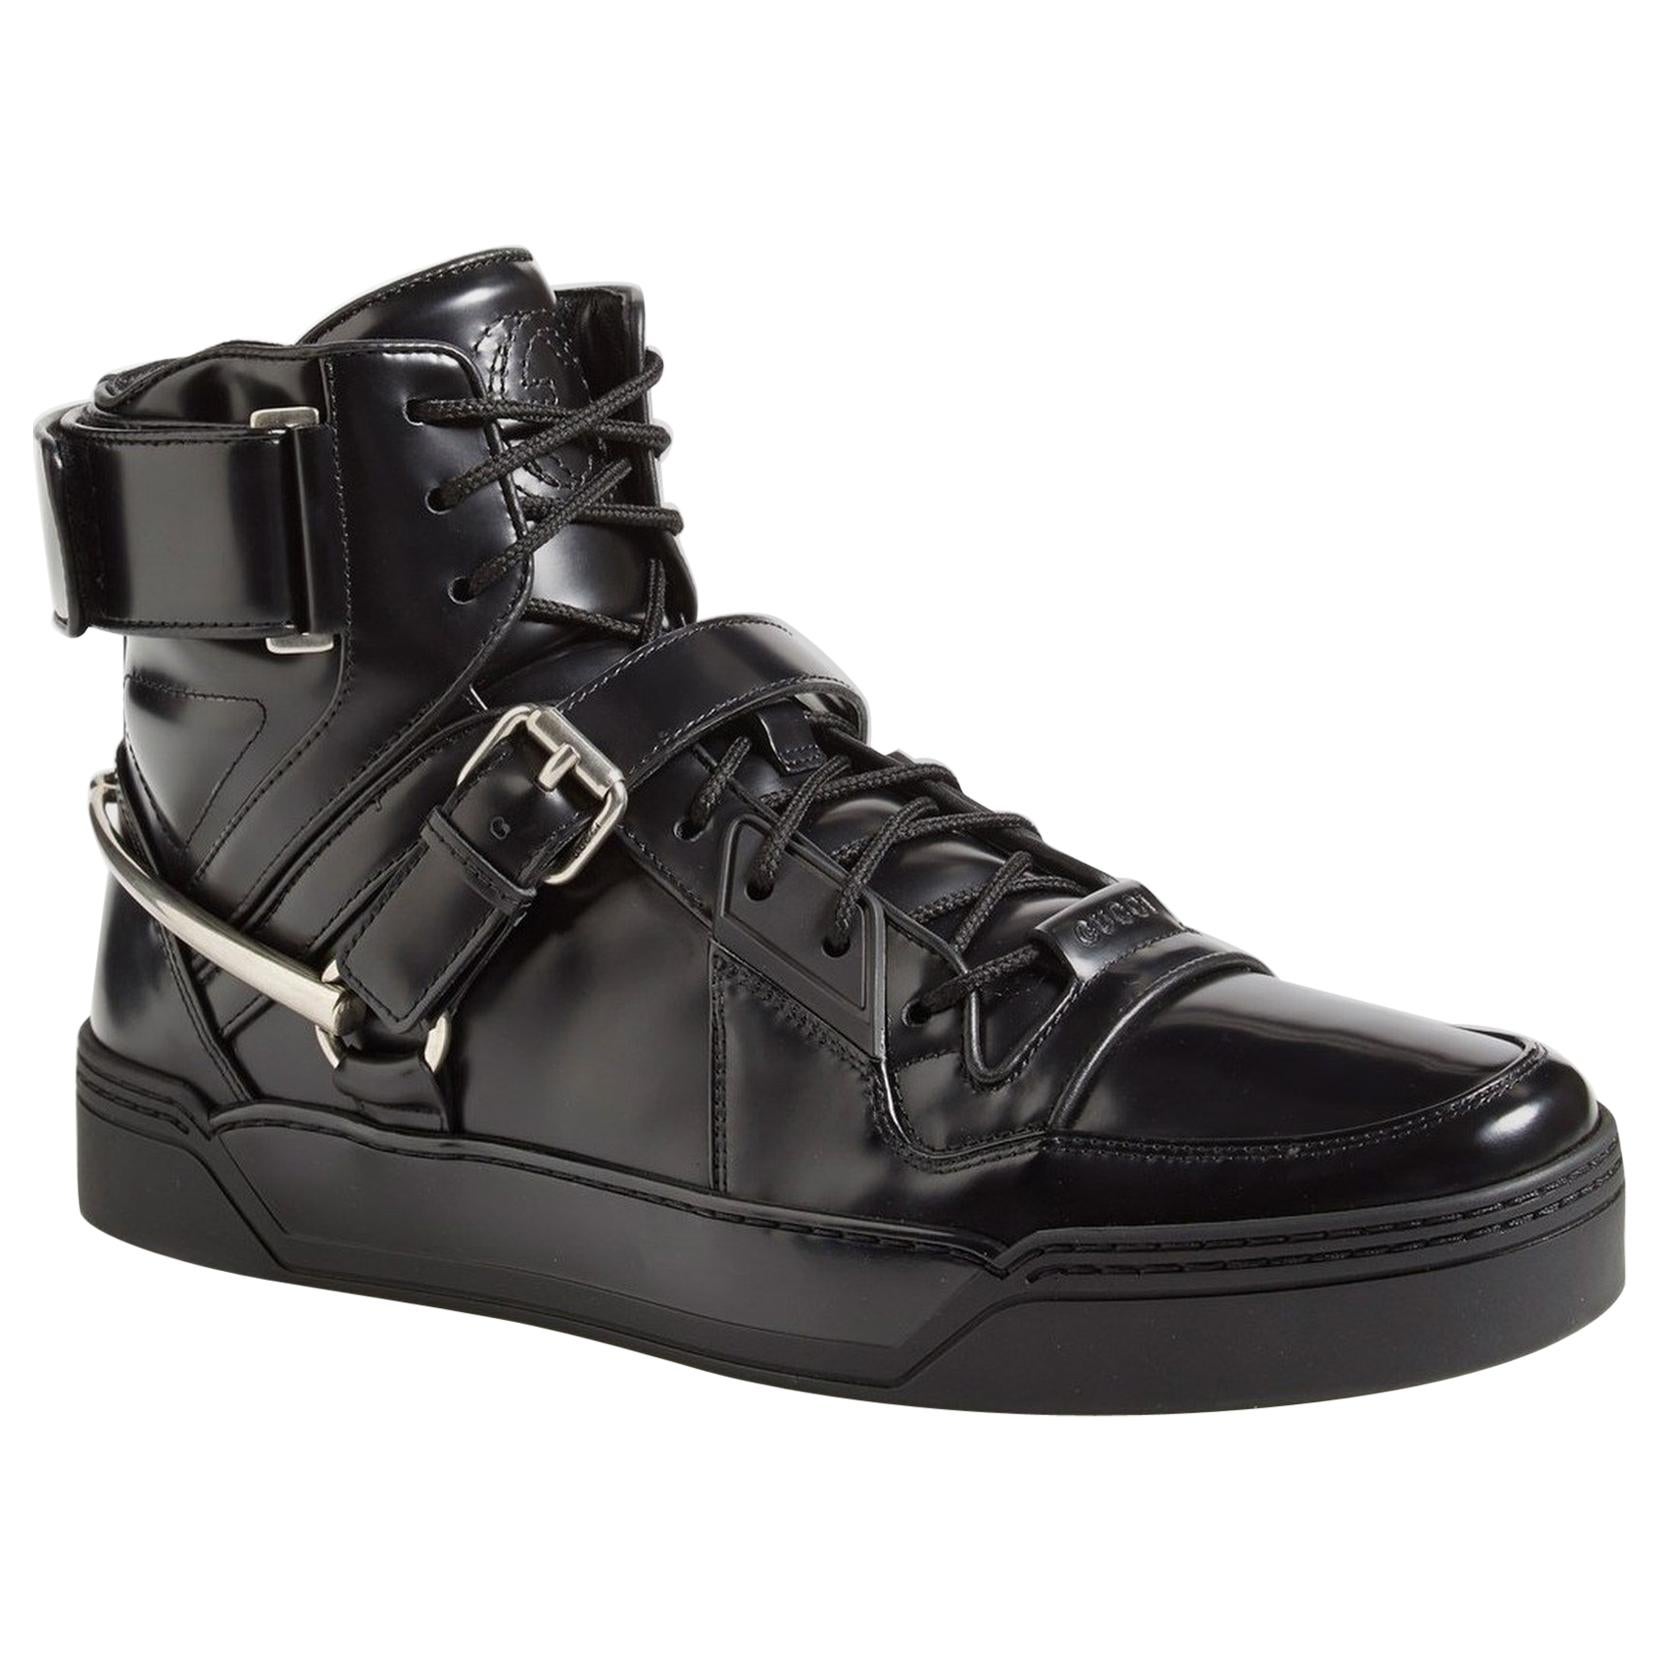 New Gucci Men's Black *Basket Darko* High-Top Sneaker Gucci sizes 8.5  9  9.5